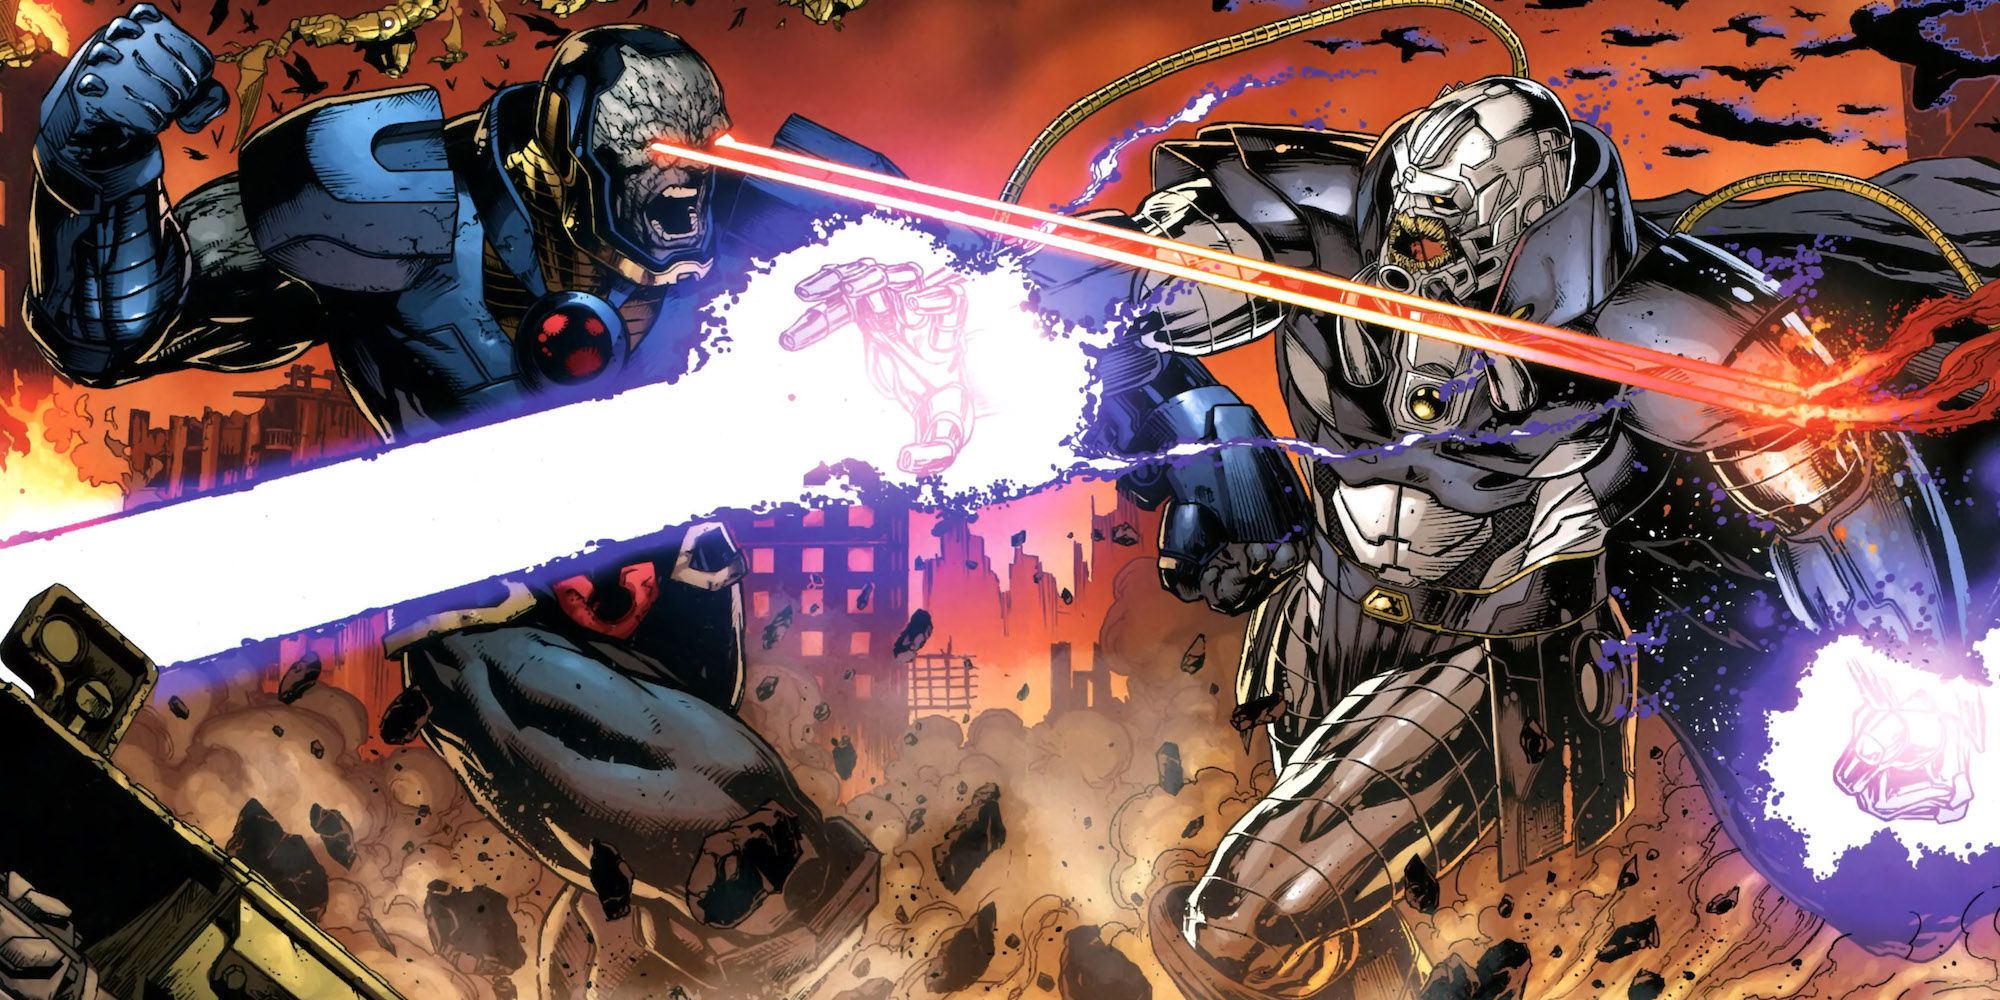 Darkseid vs Anti-Monitor